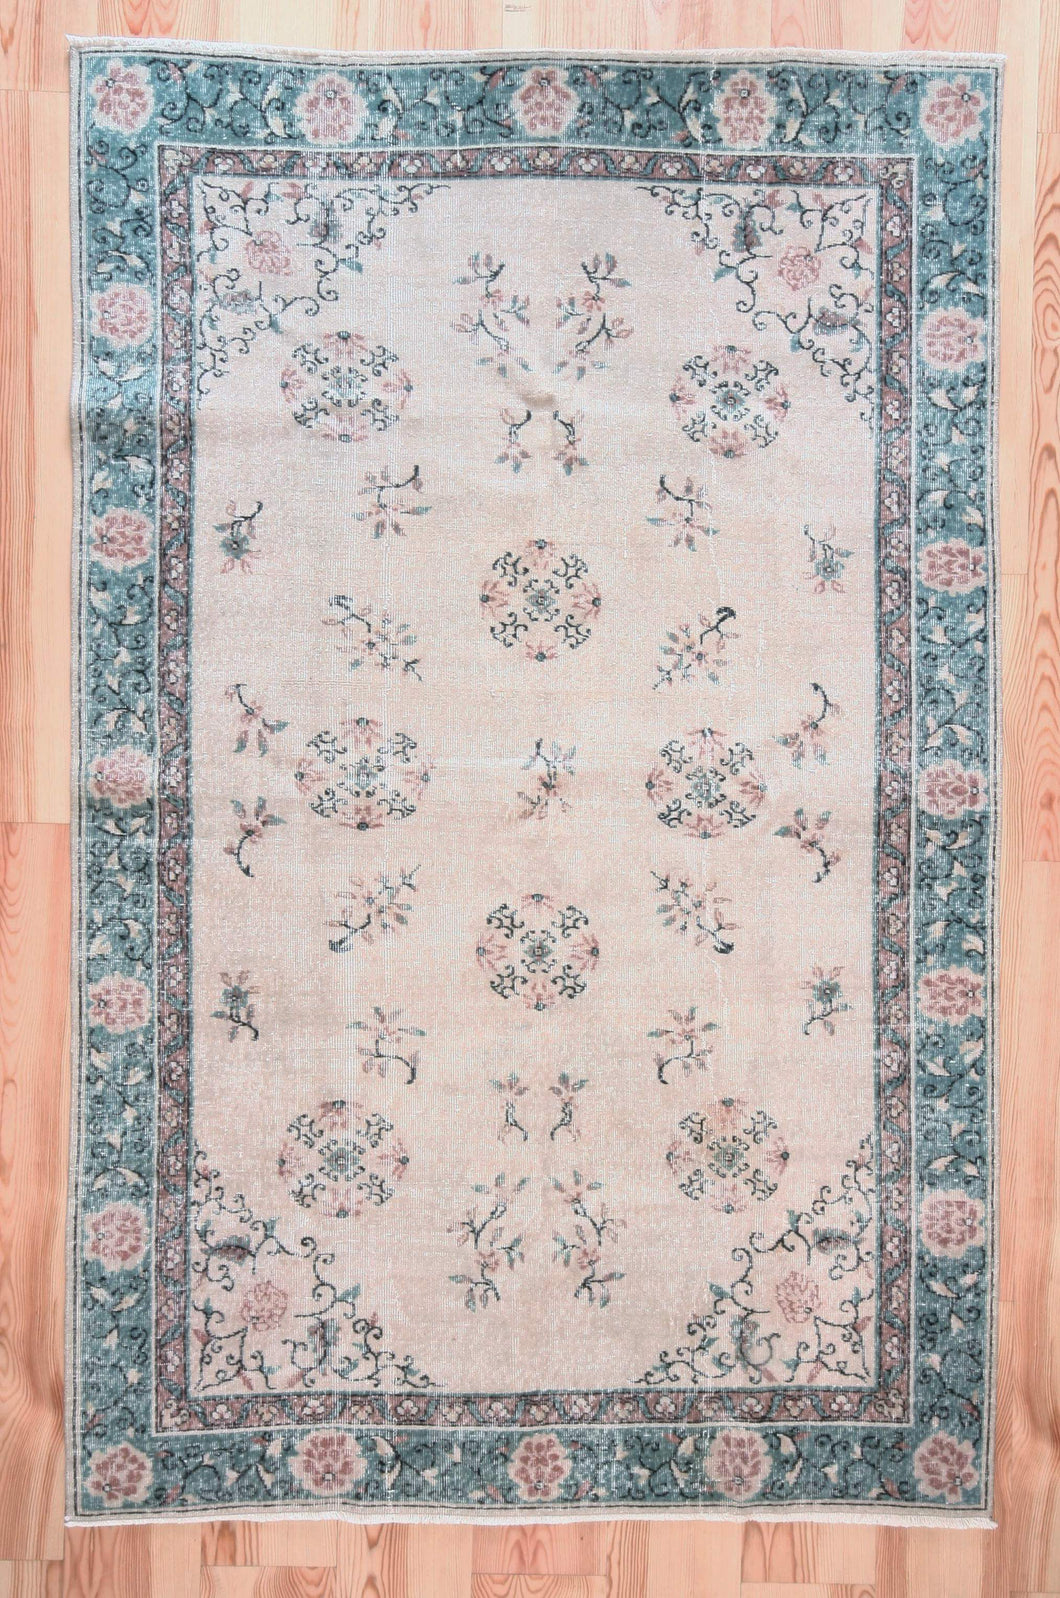 6x9 Vintage Central Anatolian 'Oushak' Turkish Area Rug | Khotan style rug tribal designs on spacious field | SKU 437